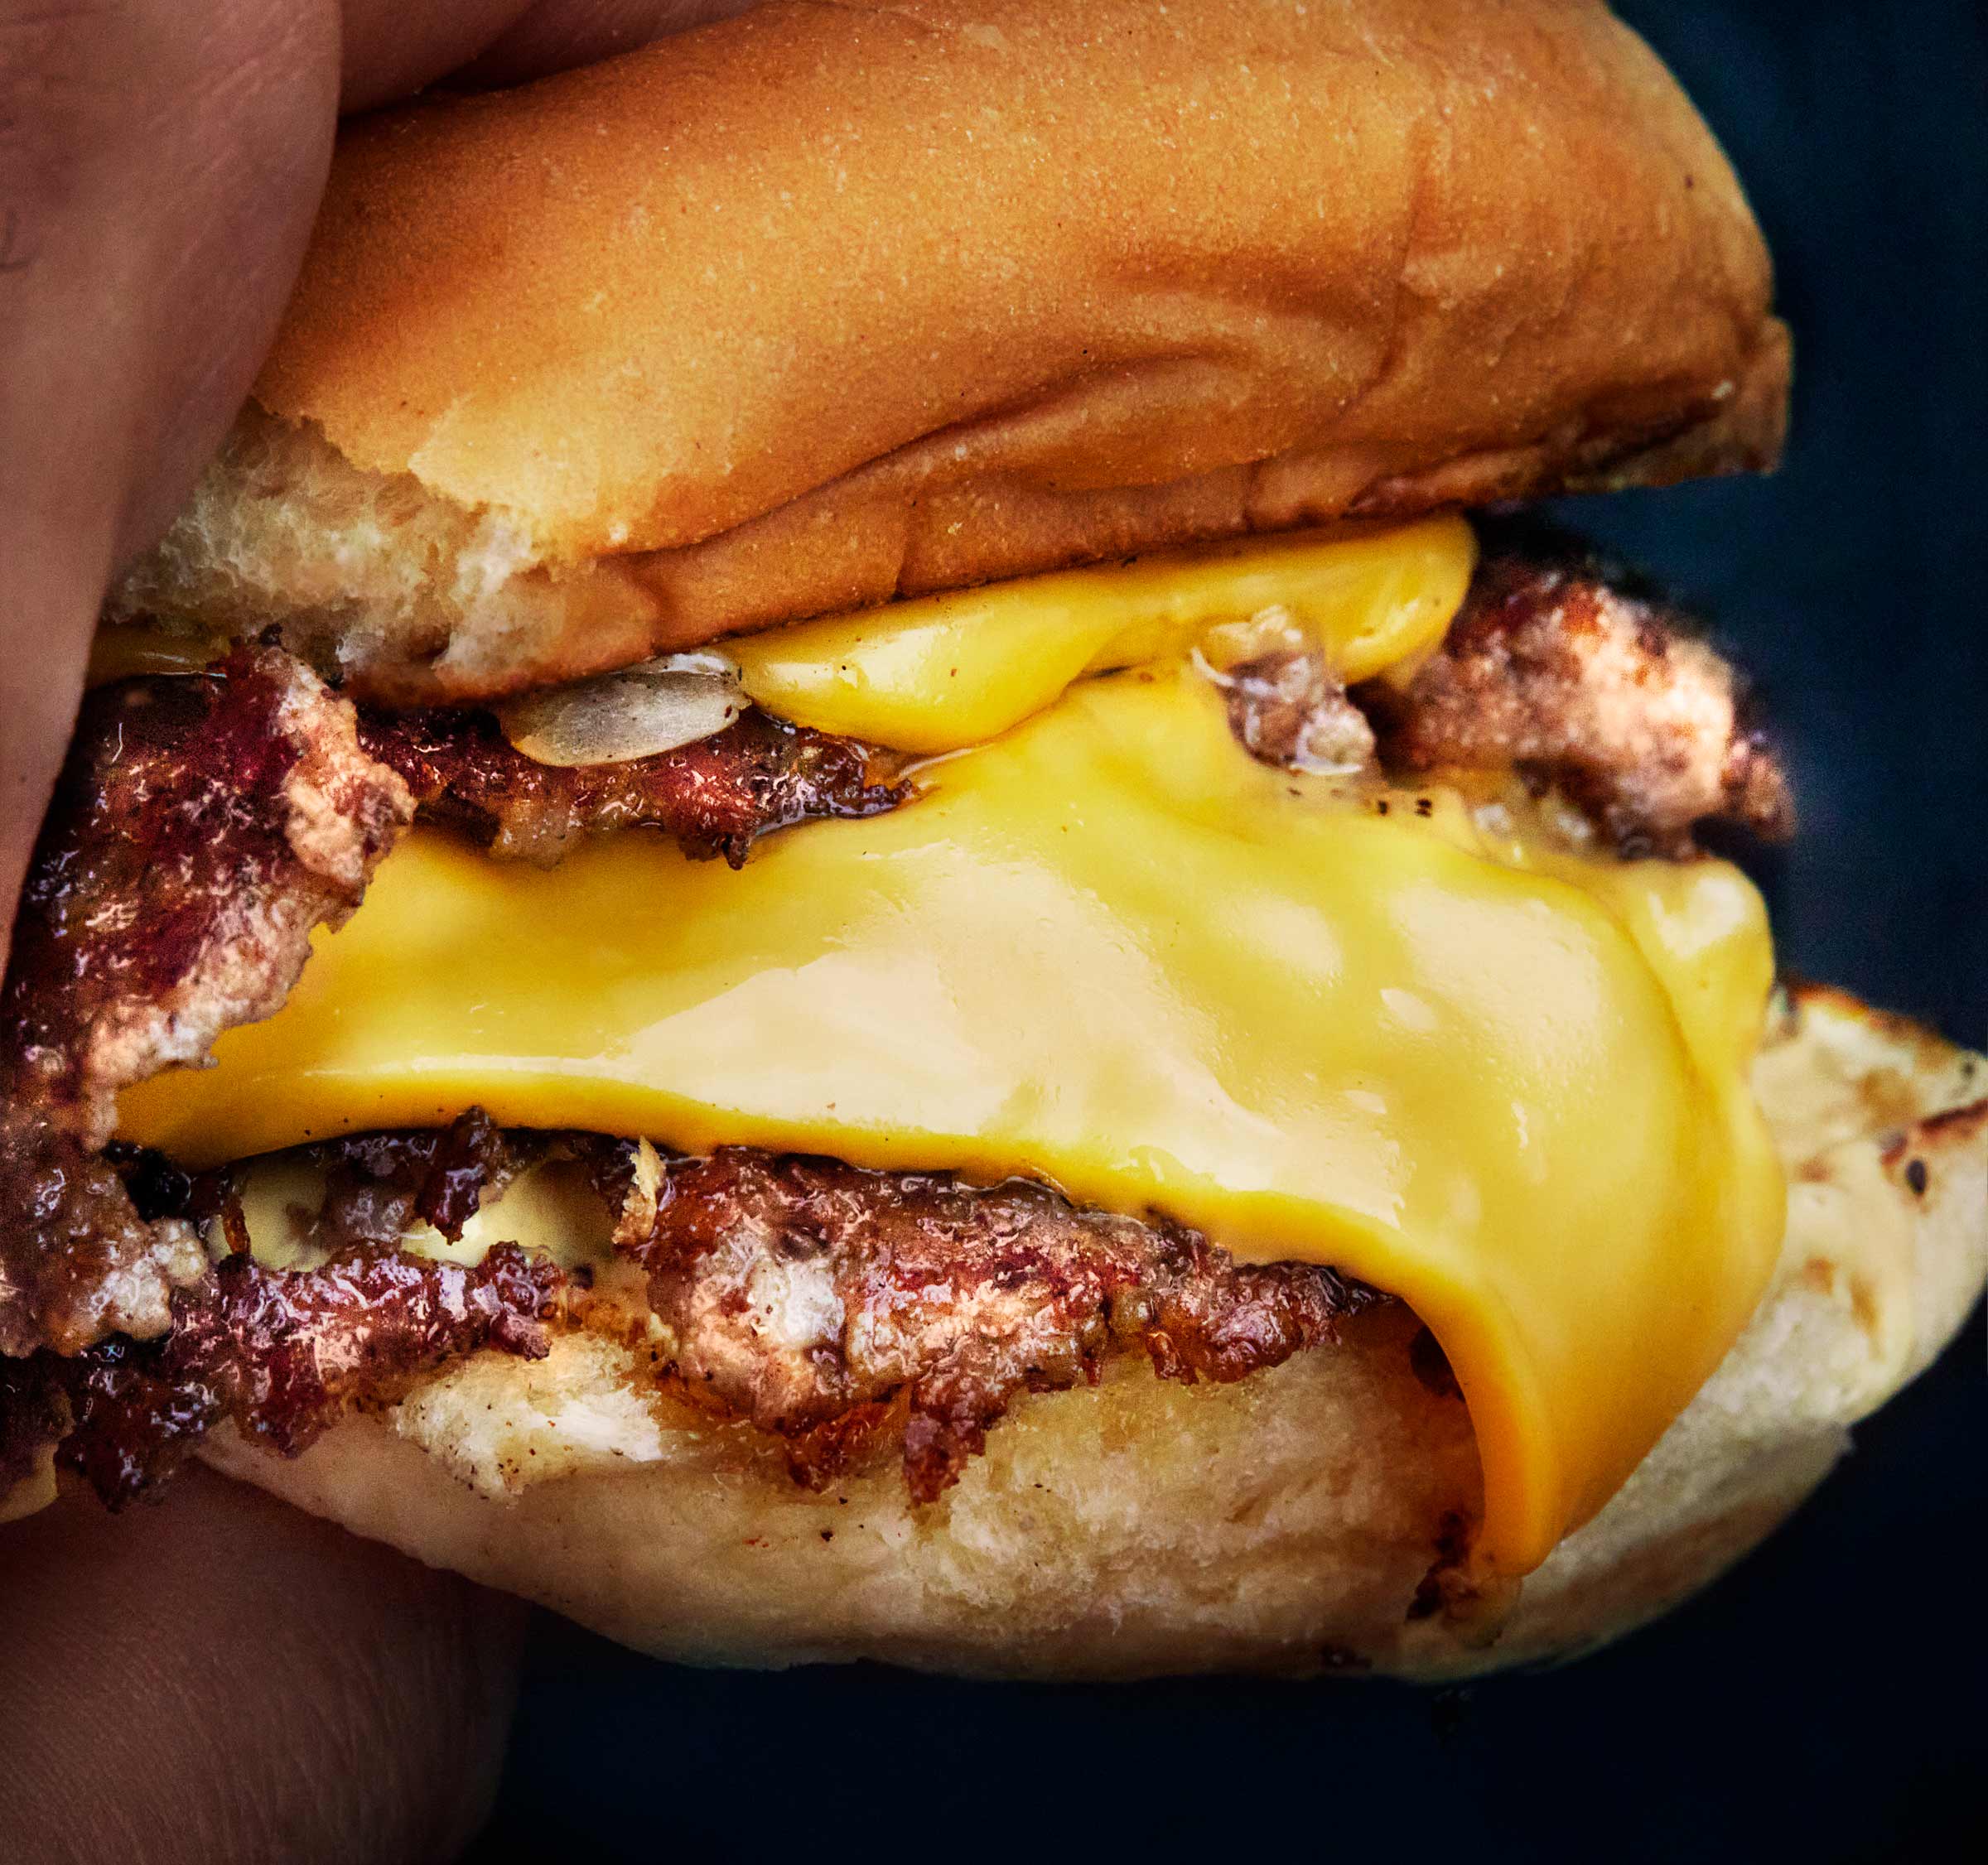 Double smash cheese burger, sautéed onions and secret sauce on a toasted bun.